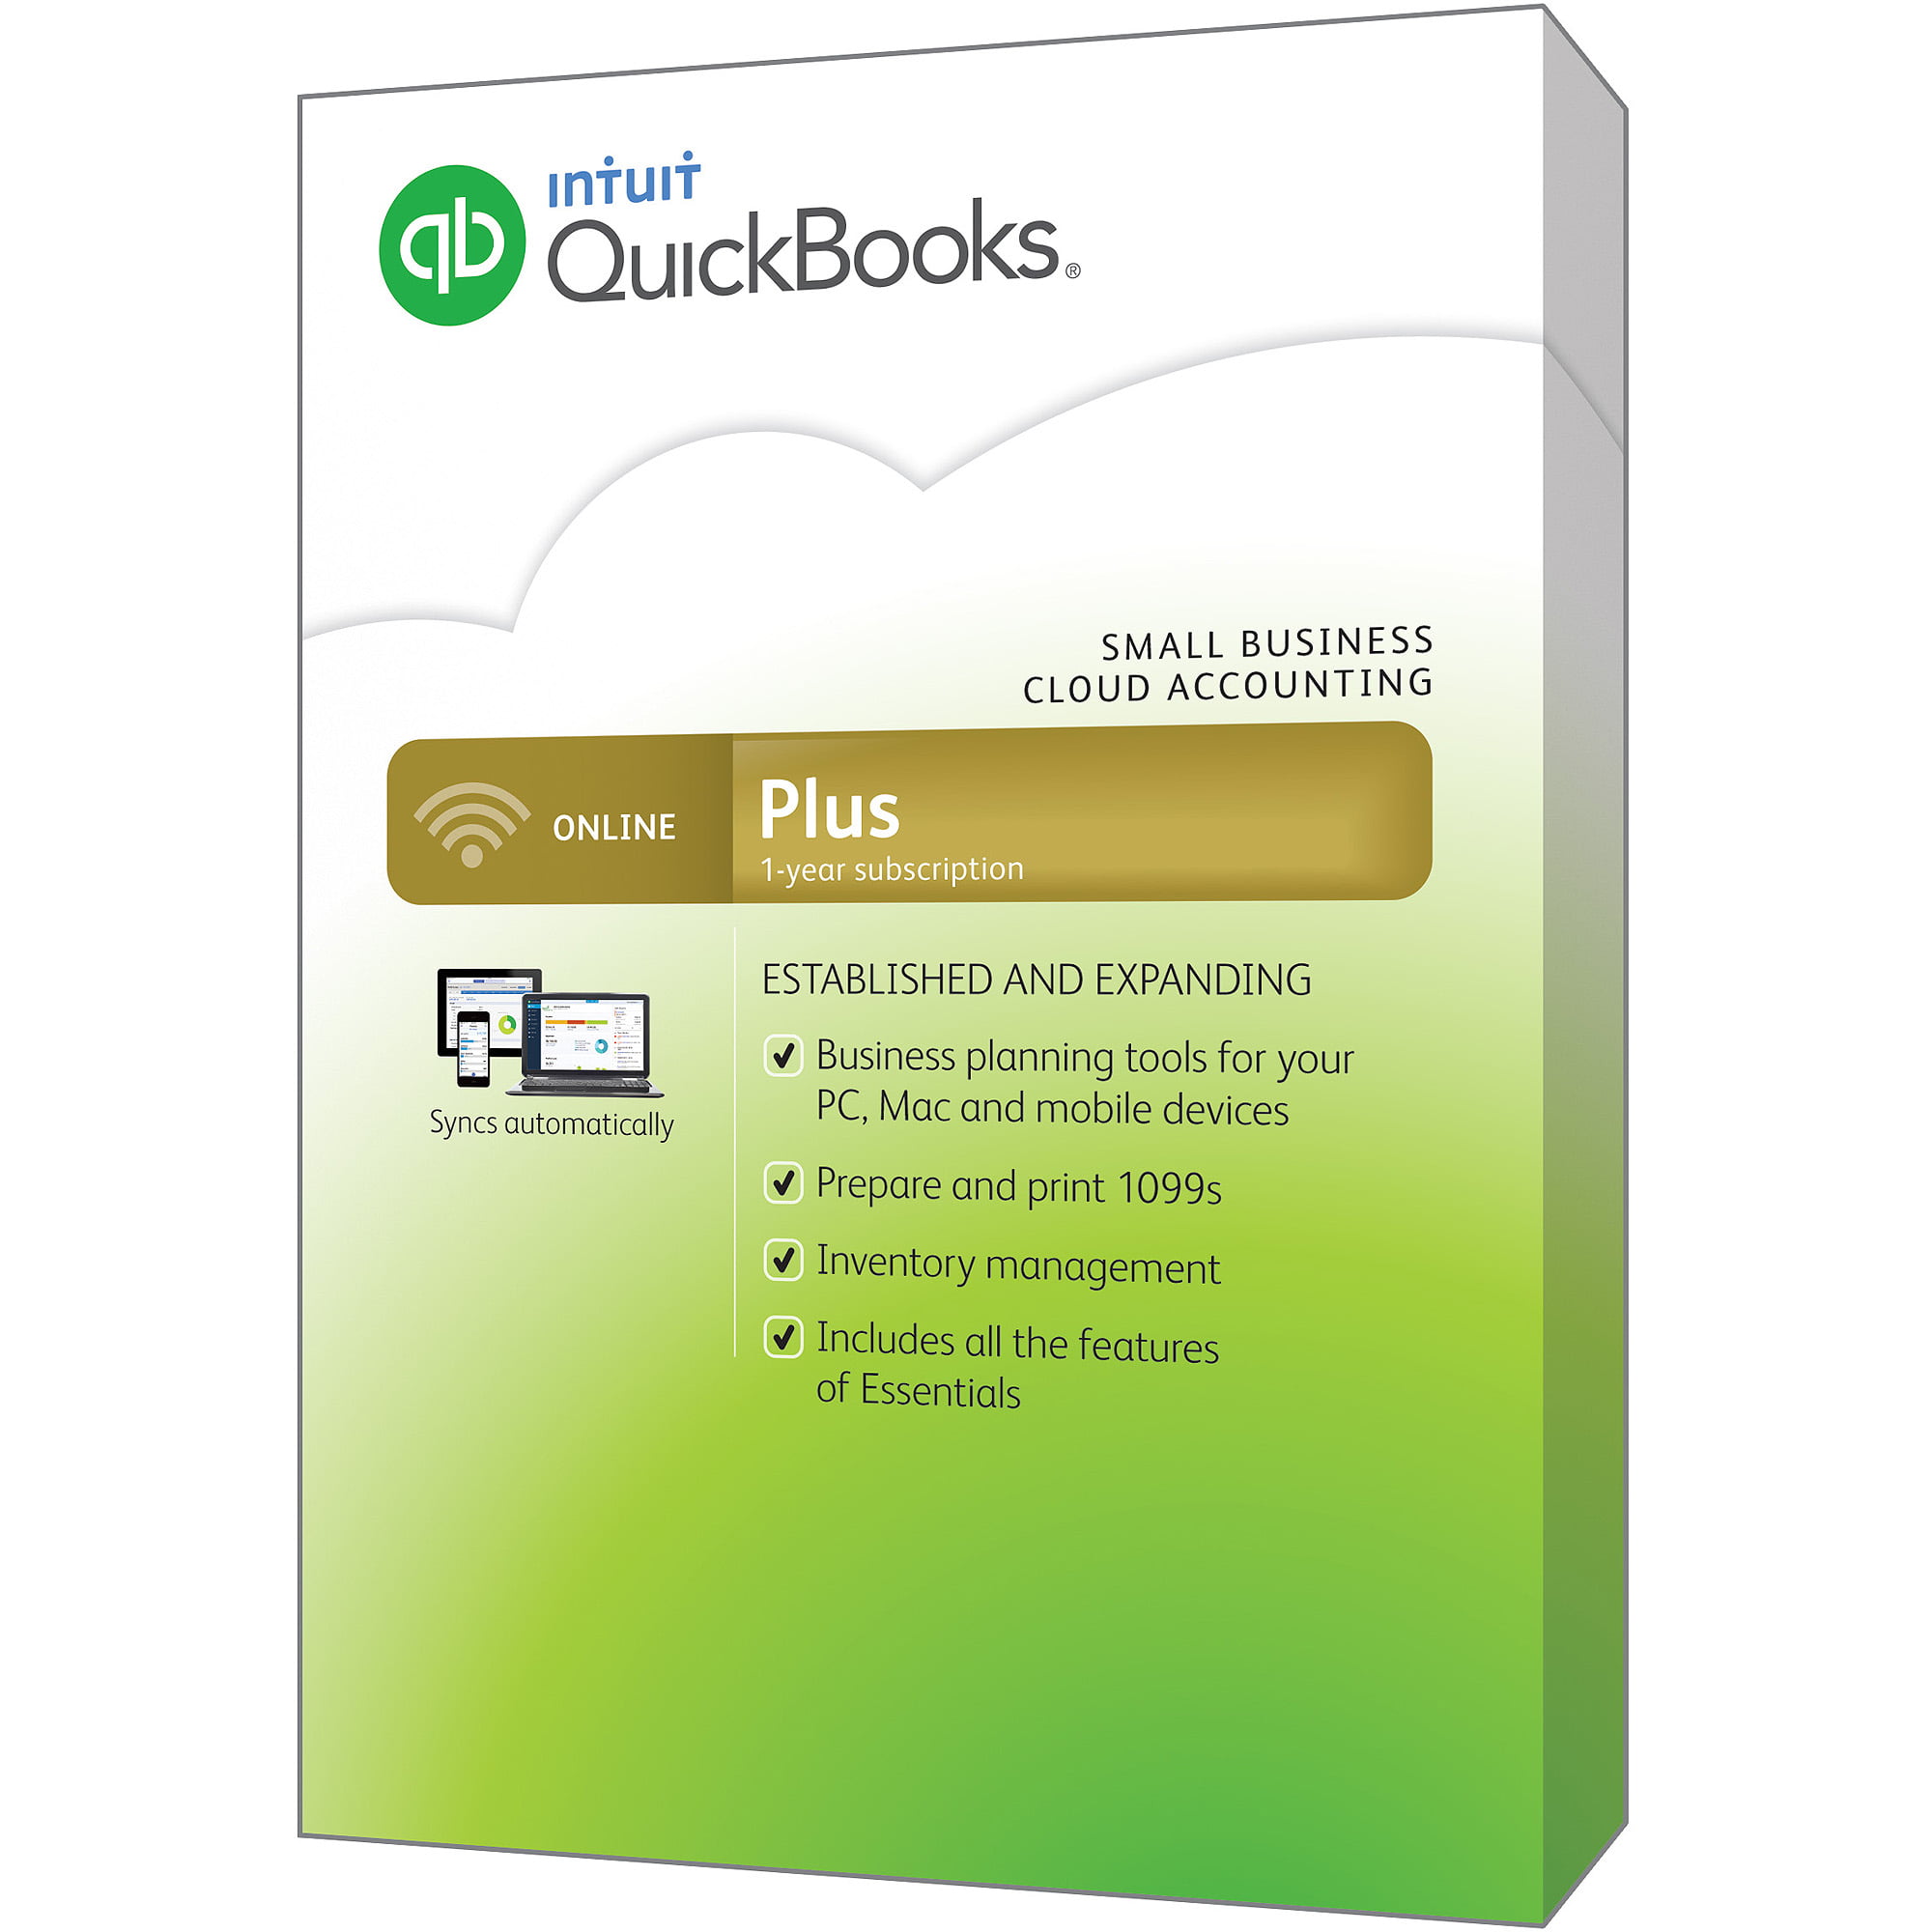 quickbooks intuit login safe